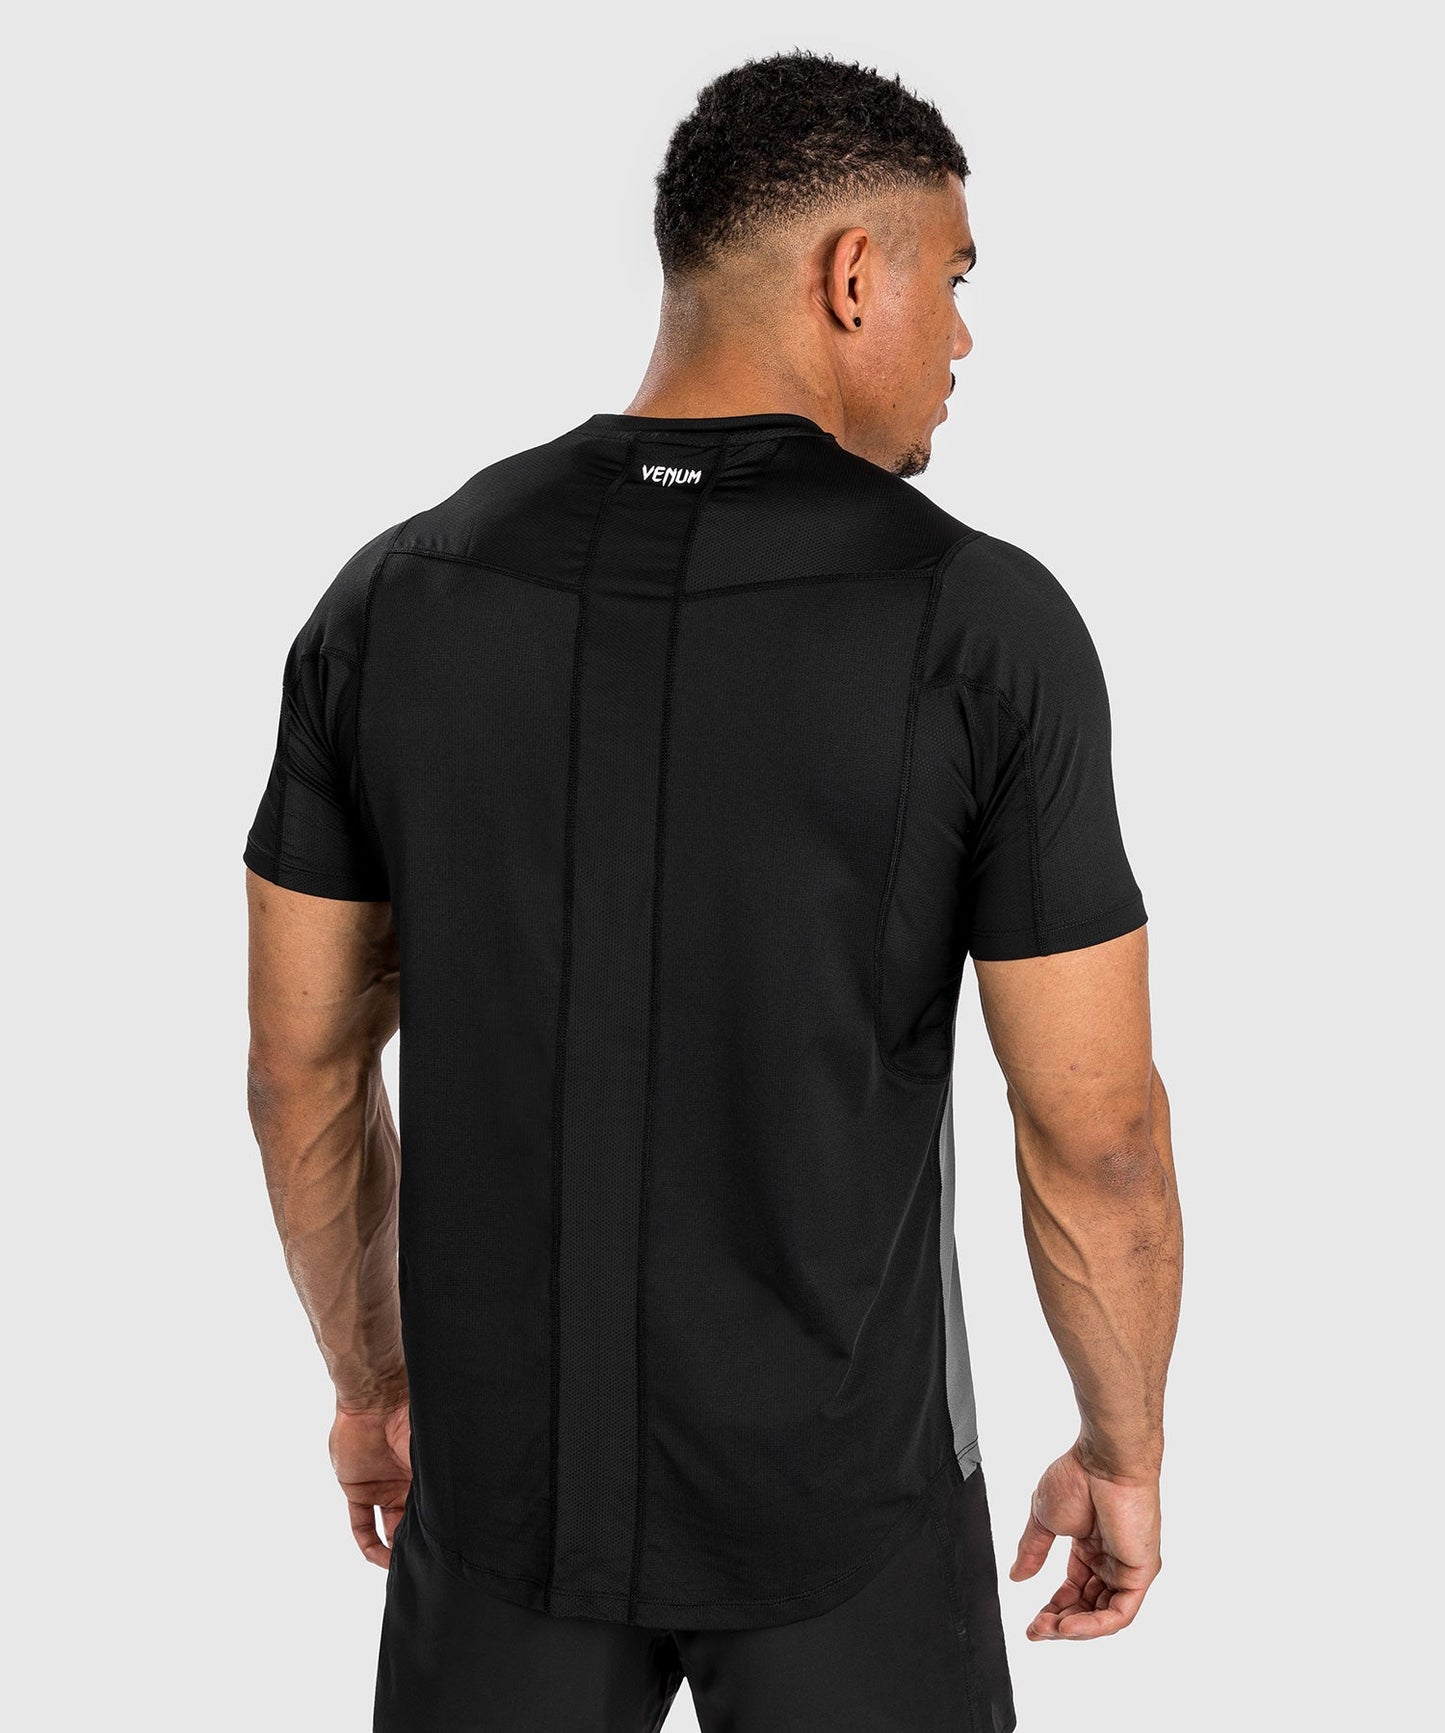 Venum Attack Men's Dry-Tech T-Shirt - Black